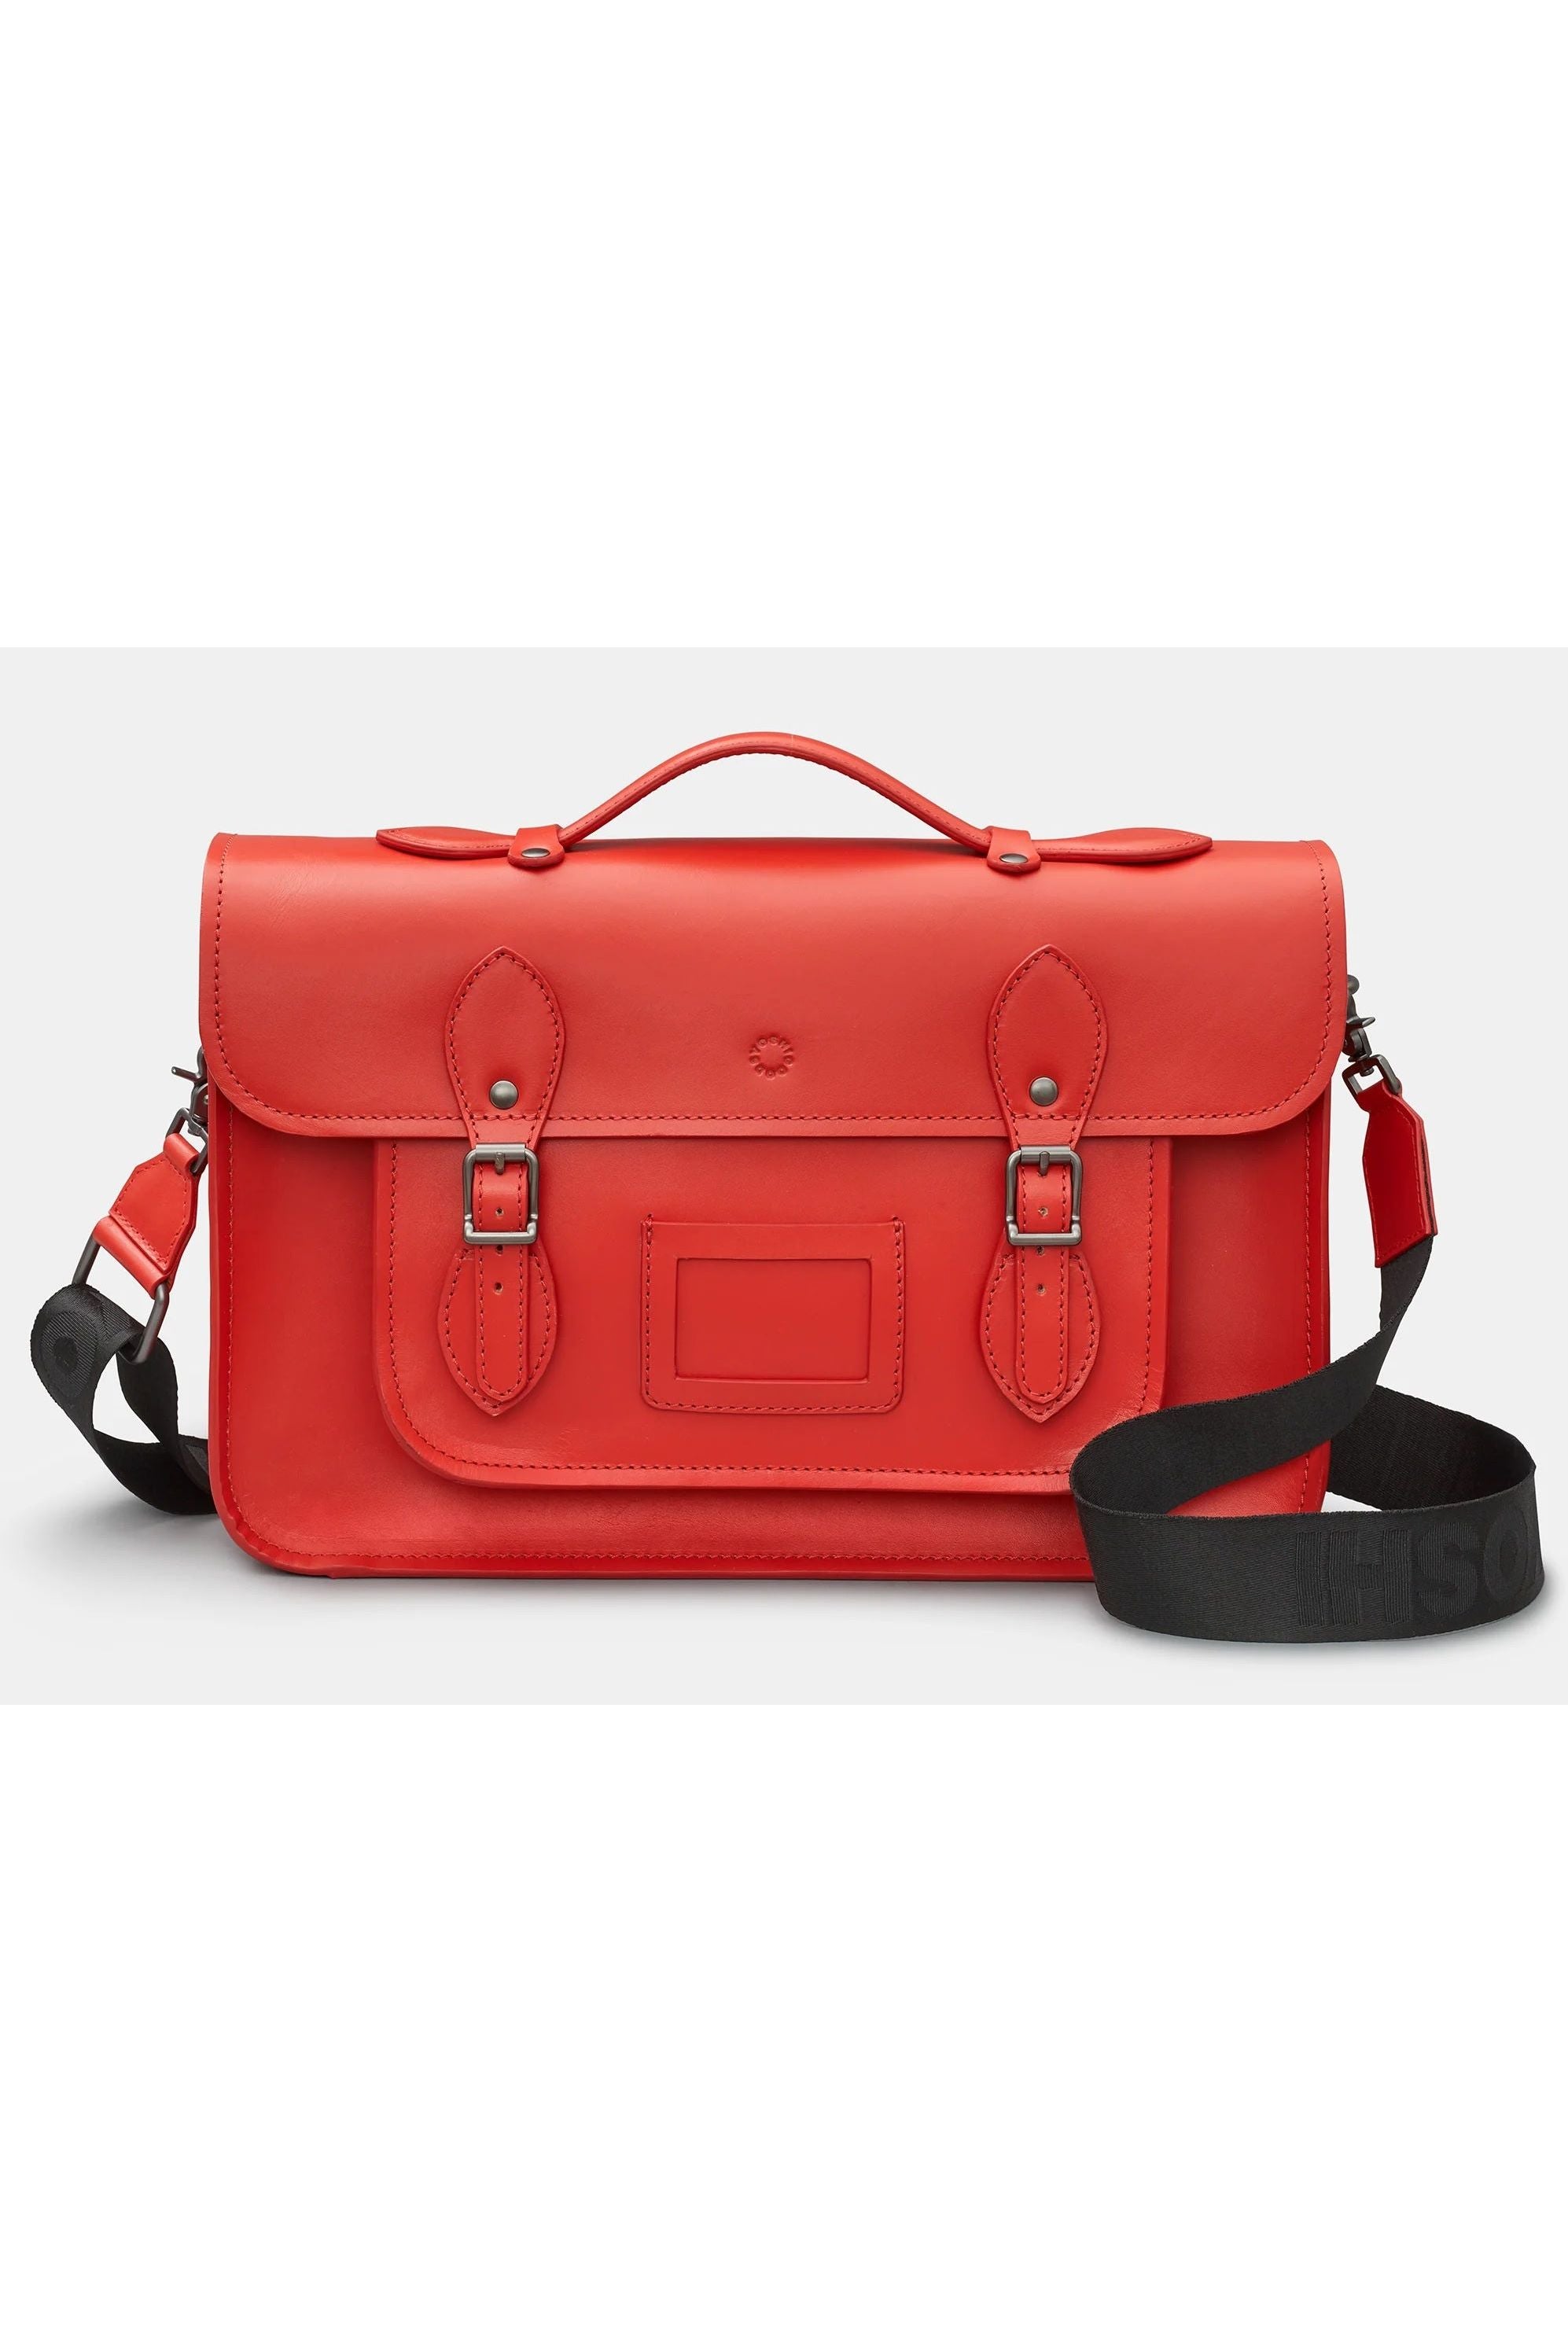 Yoshi Belforte leather Satchel bag in red